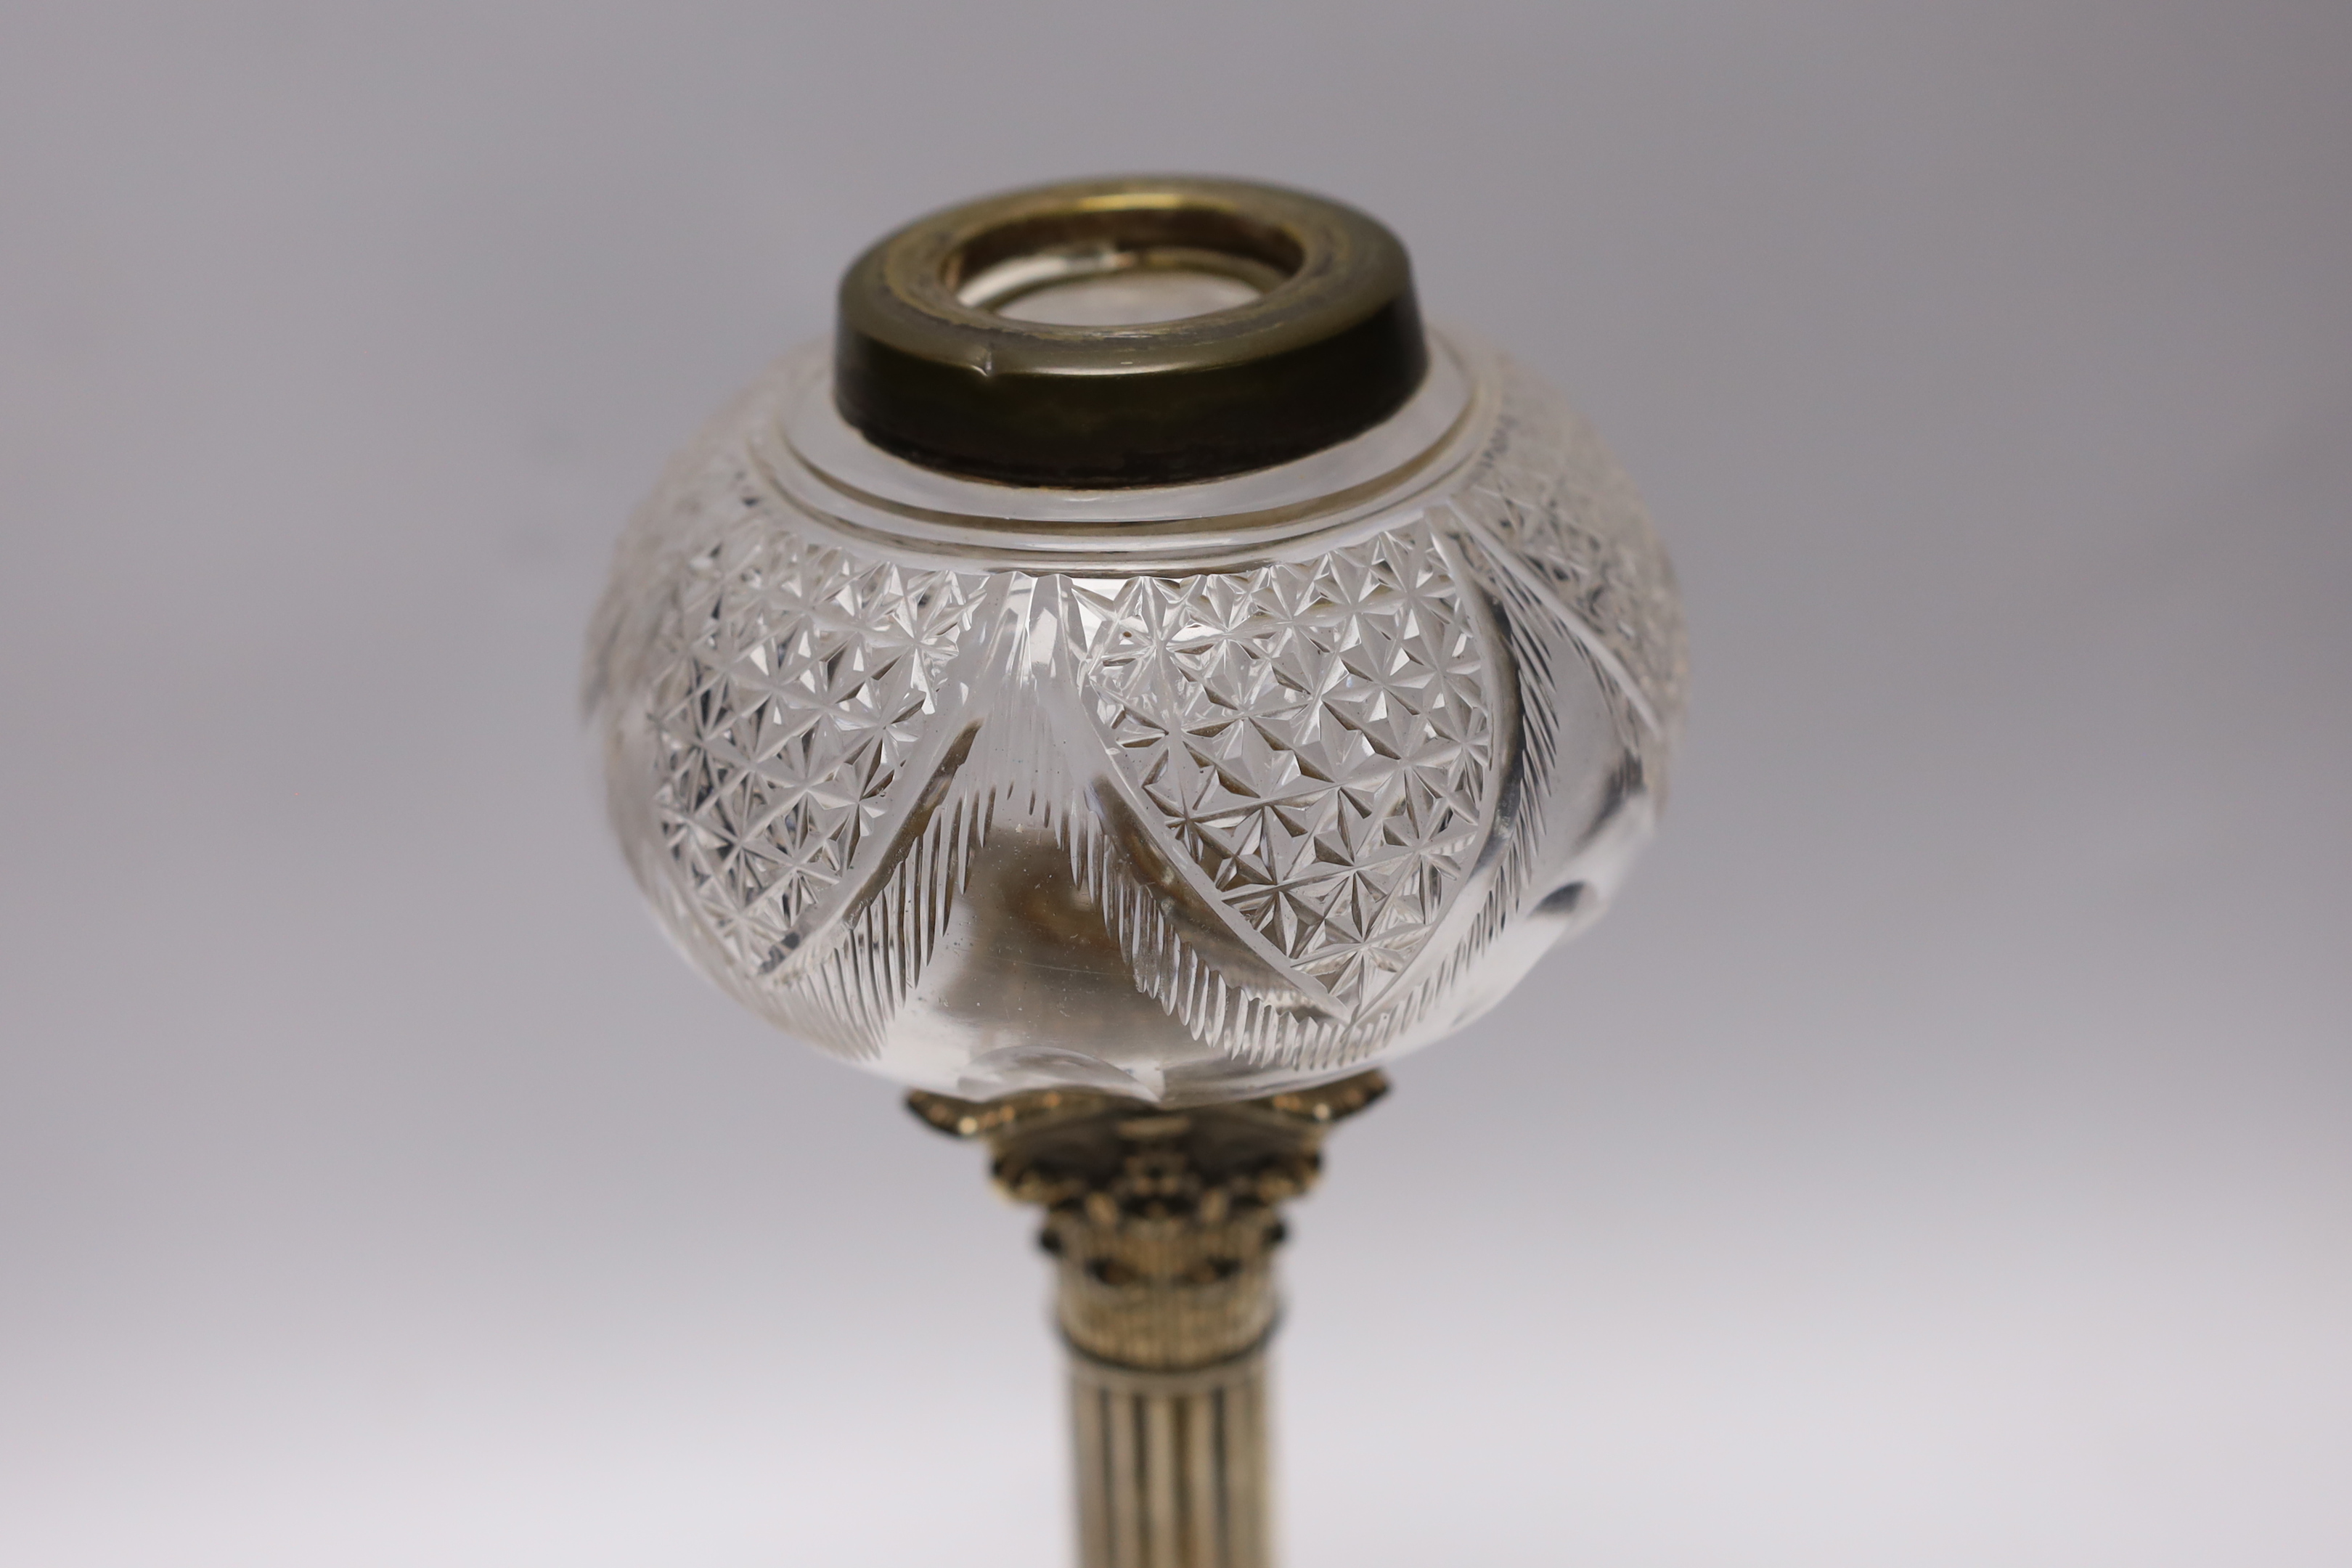 An Edwardian silver mounted Corinthian column candlestick, Thomas Bradbury & Son, London, 1901, 23cm, now with a silver plate mounted glass reservoir.